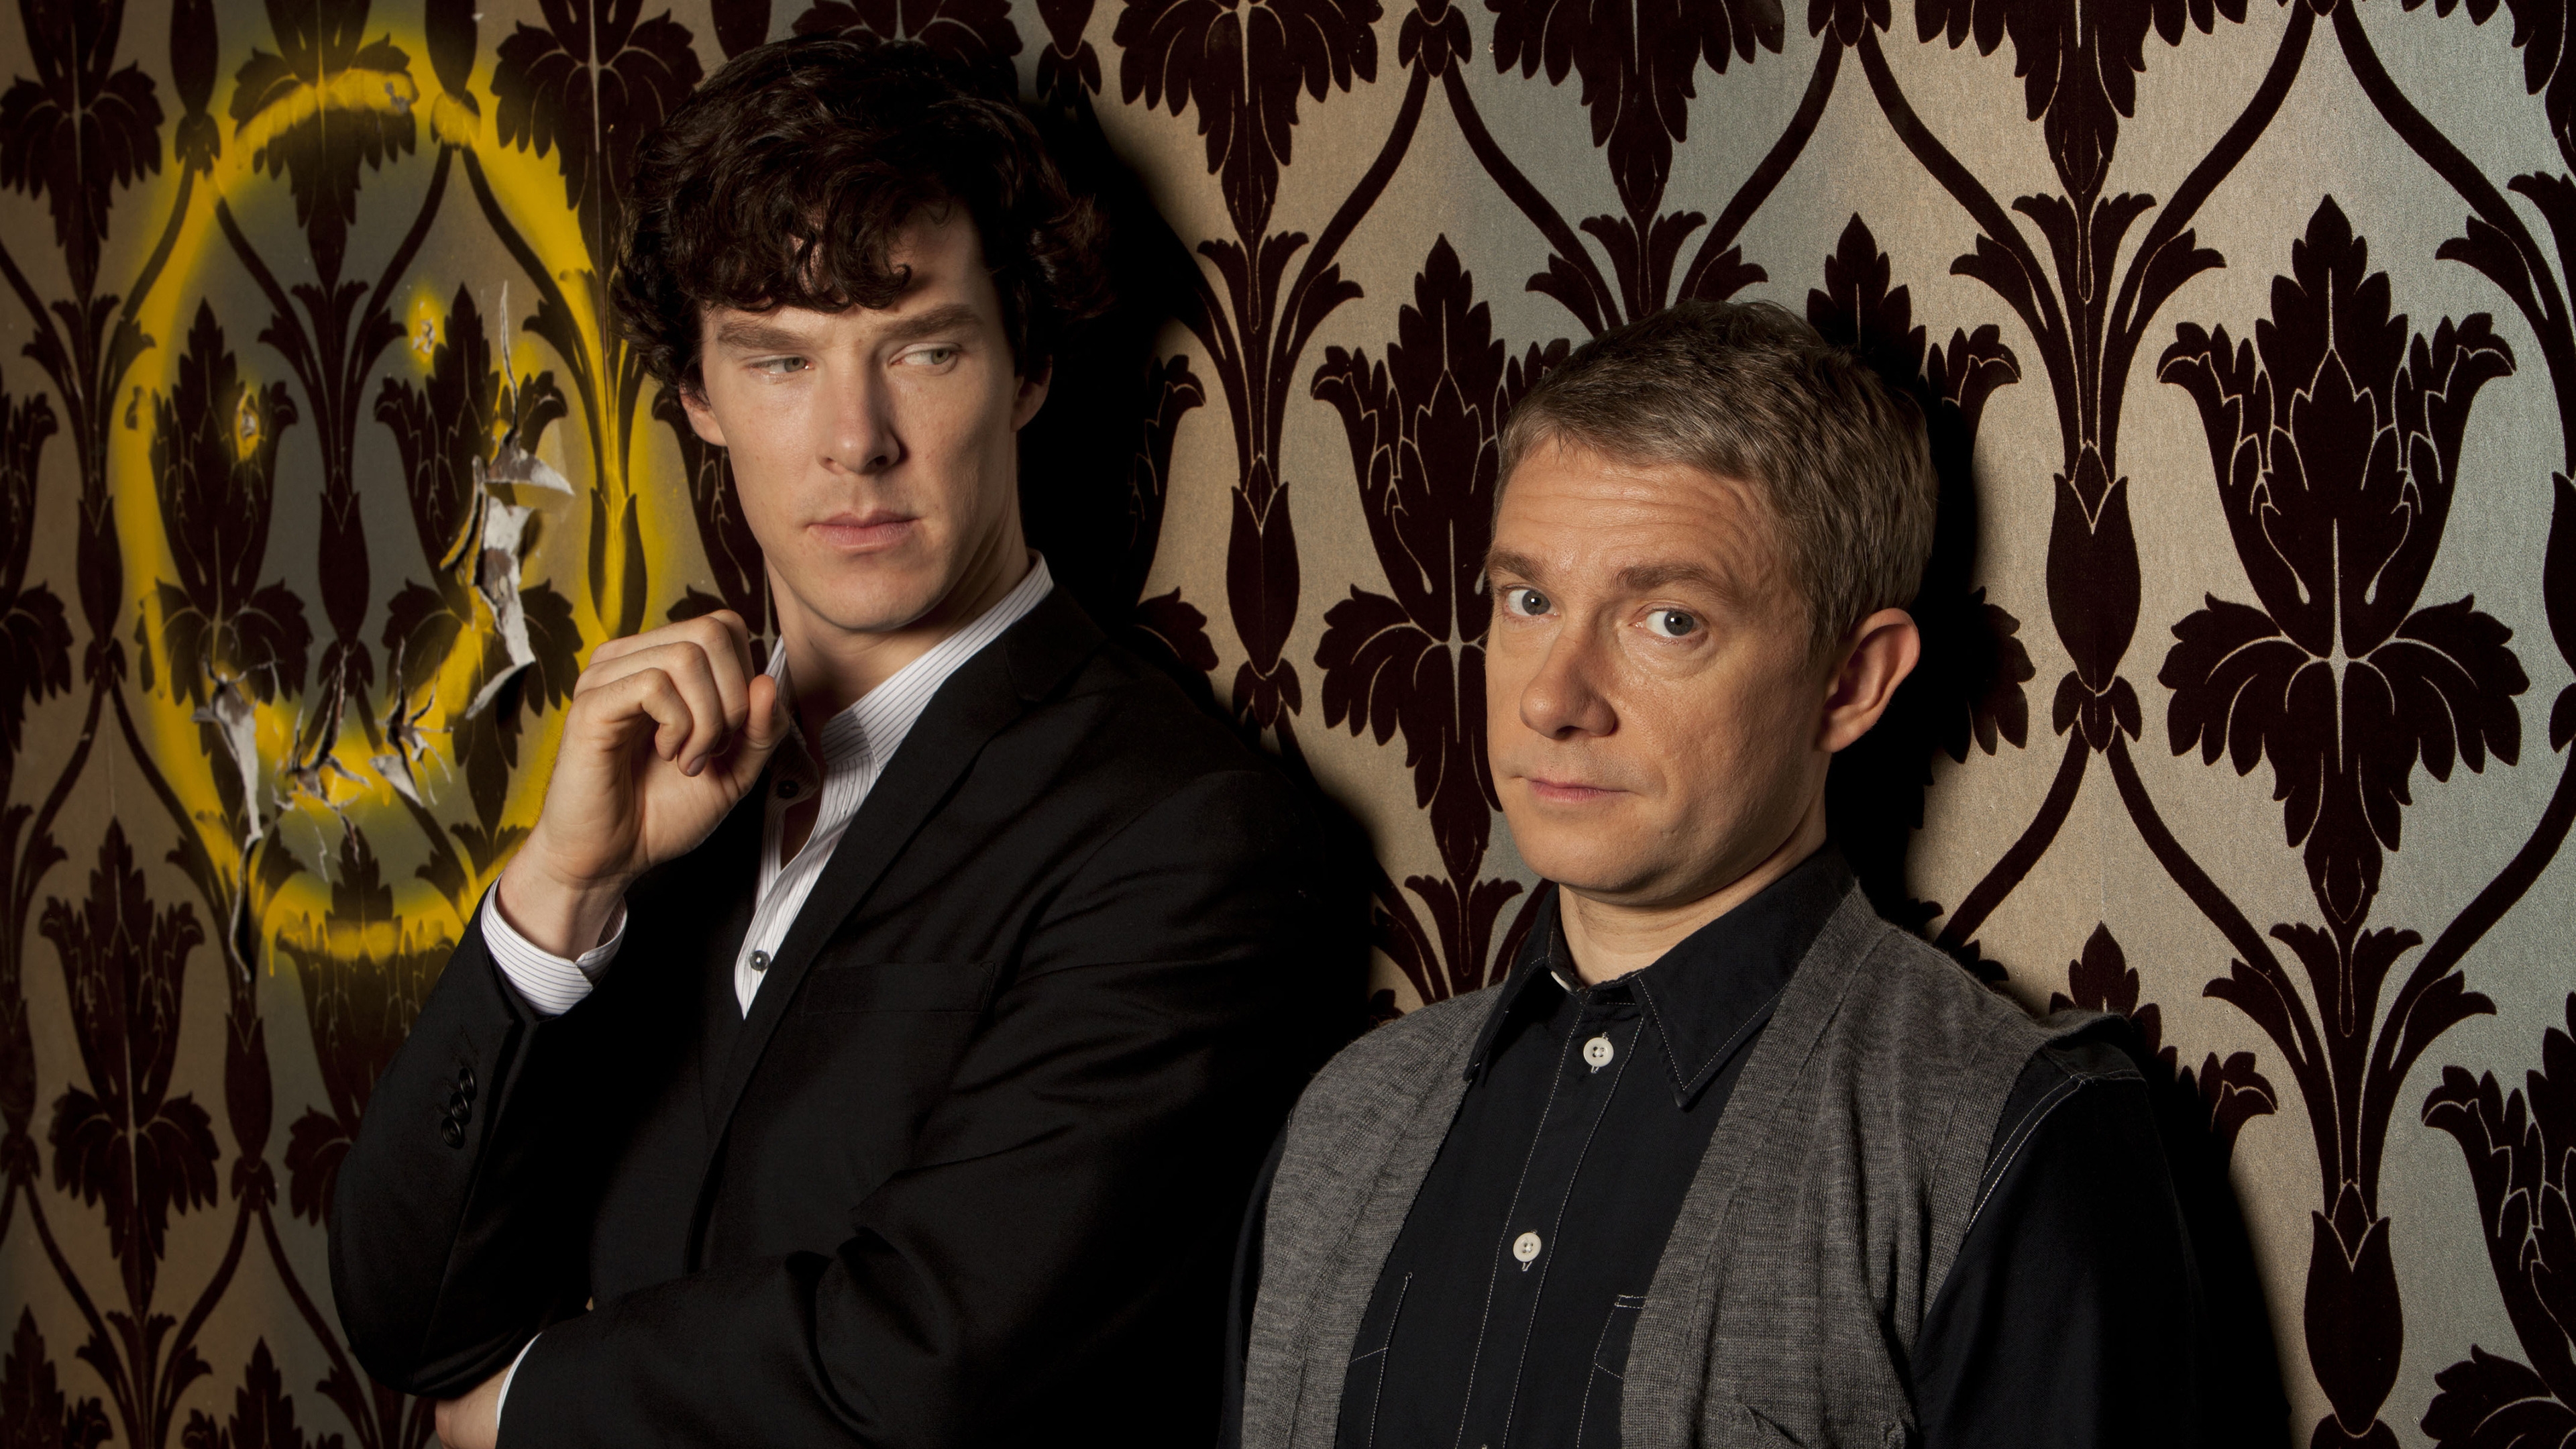 Sherlock and John for 3840 x 2160 Ultra HD resolution